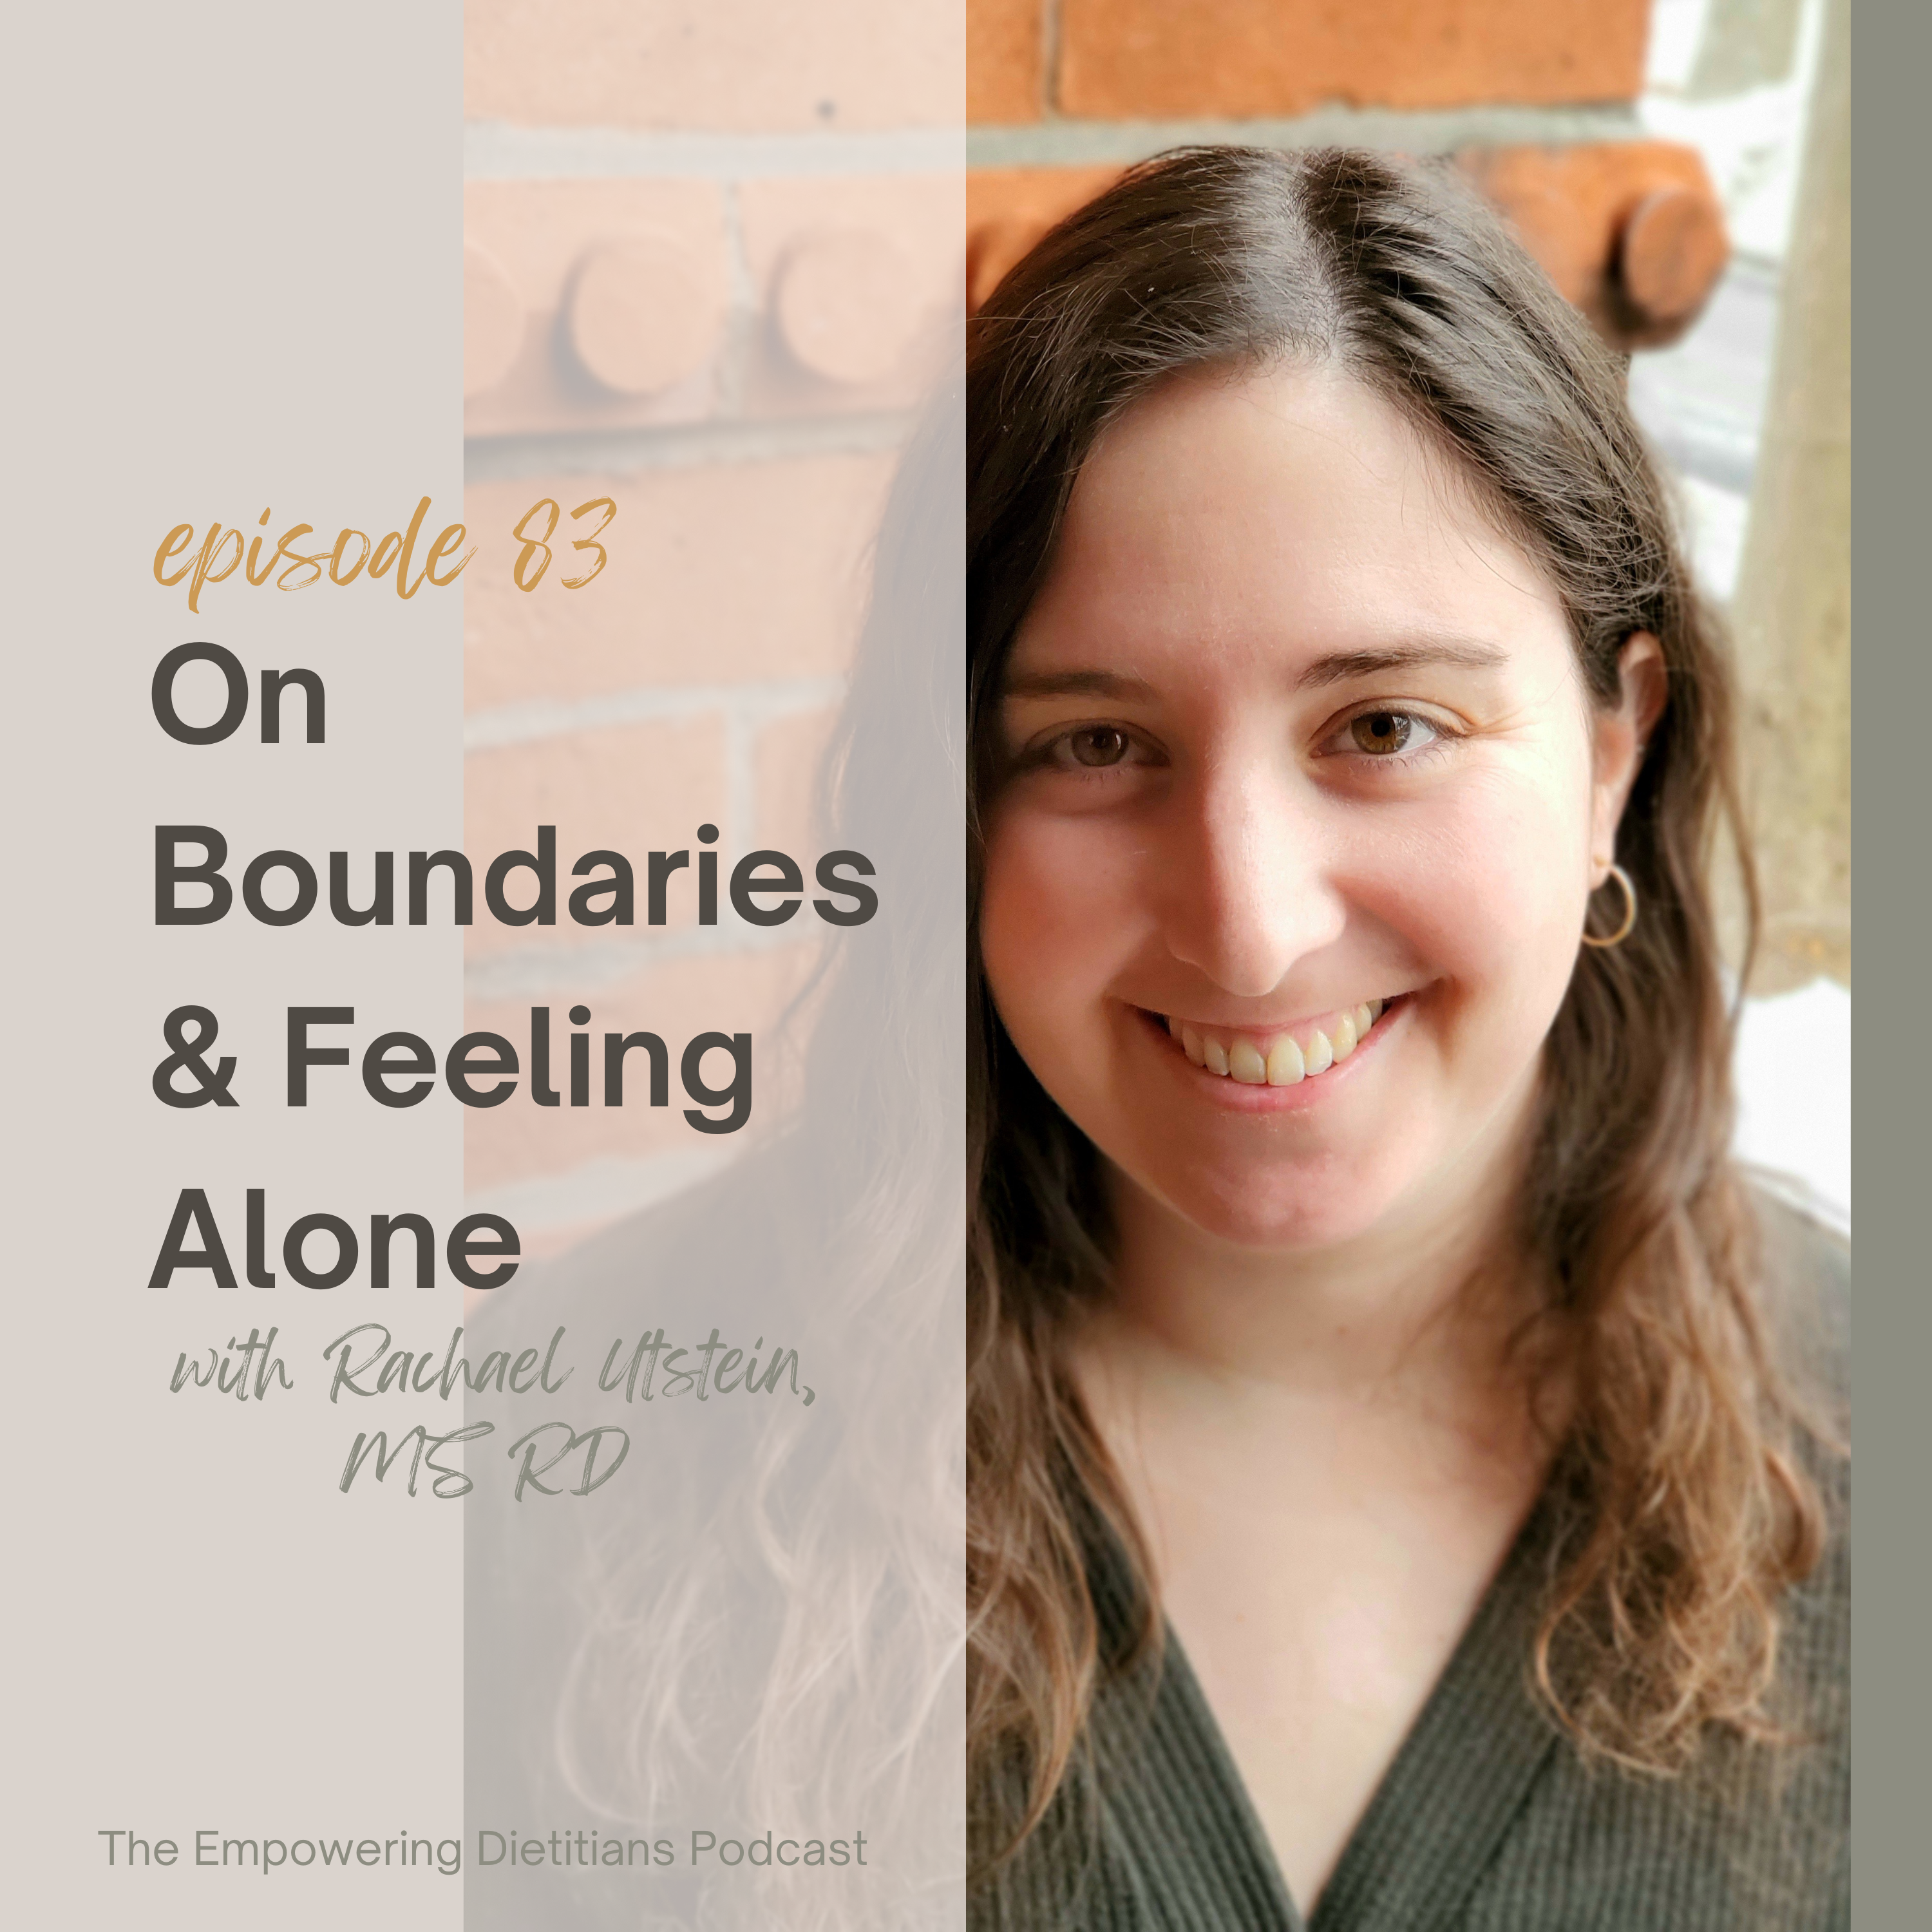 on boundaries & feeling alone with rachael utstein